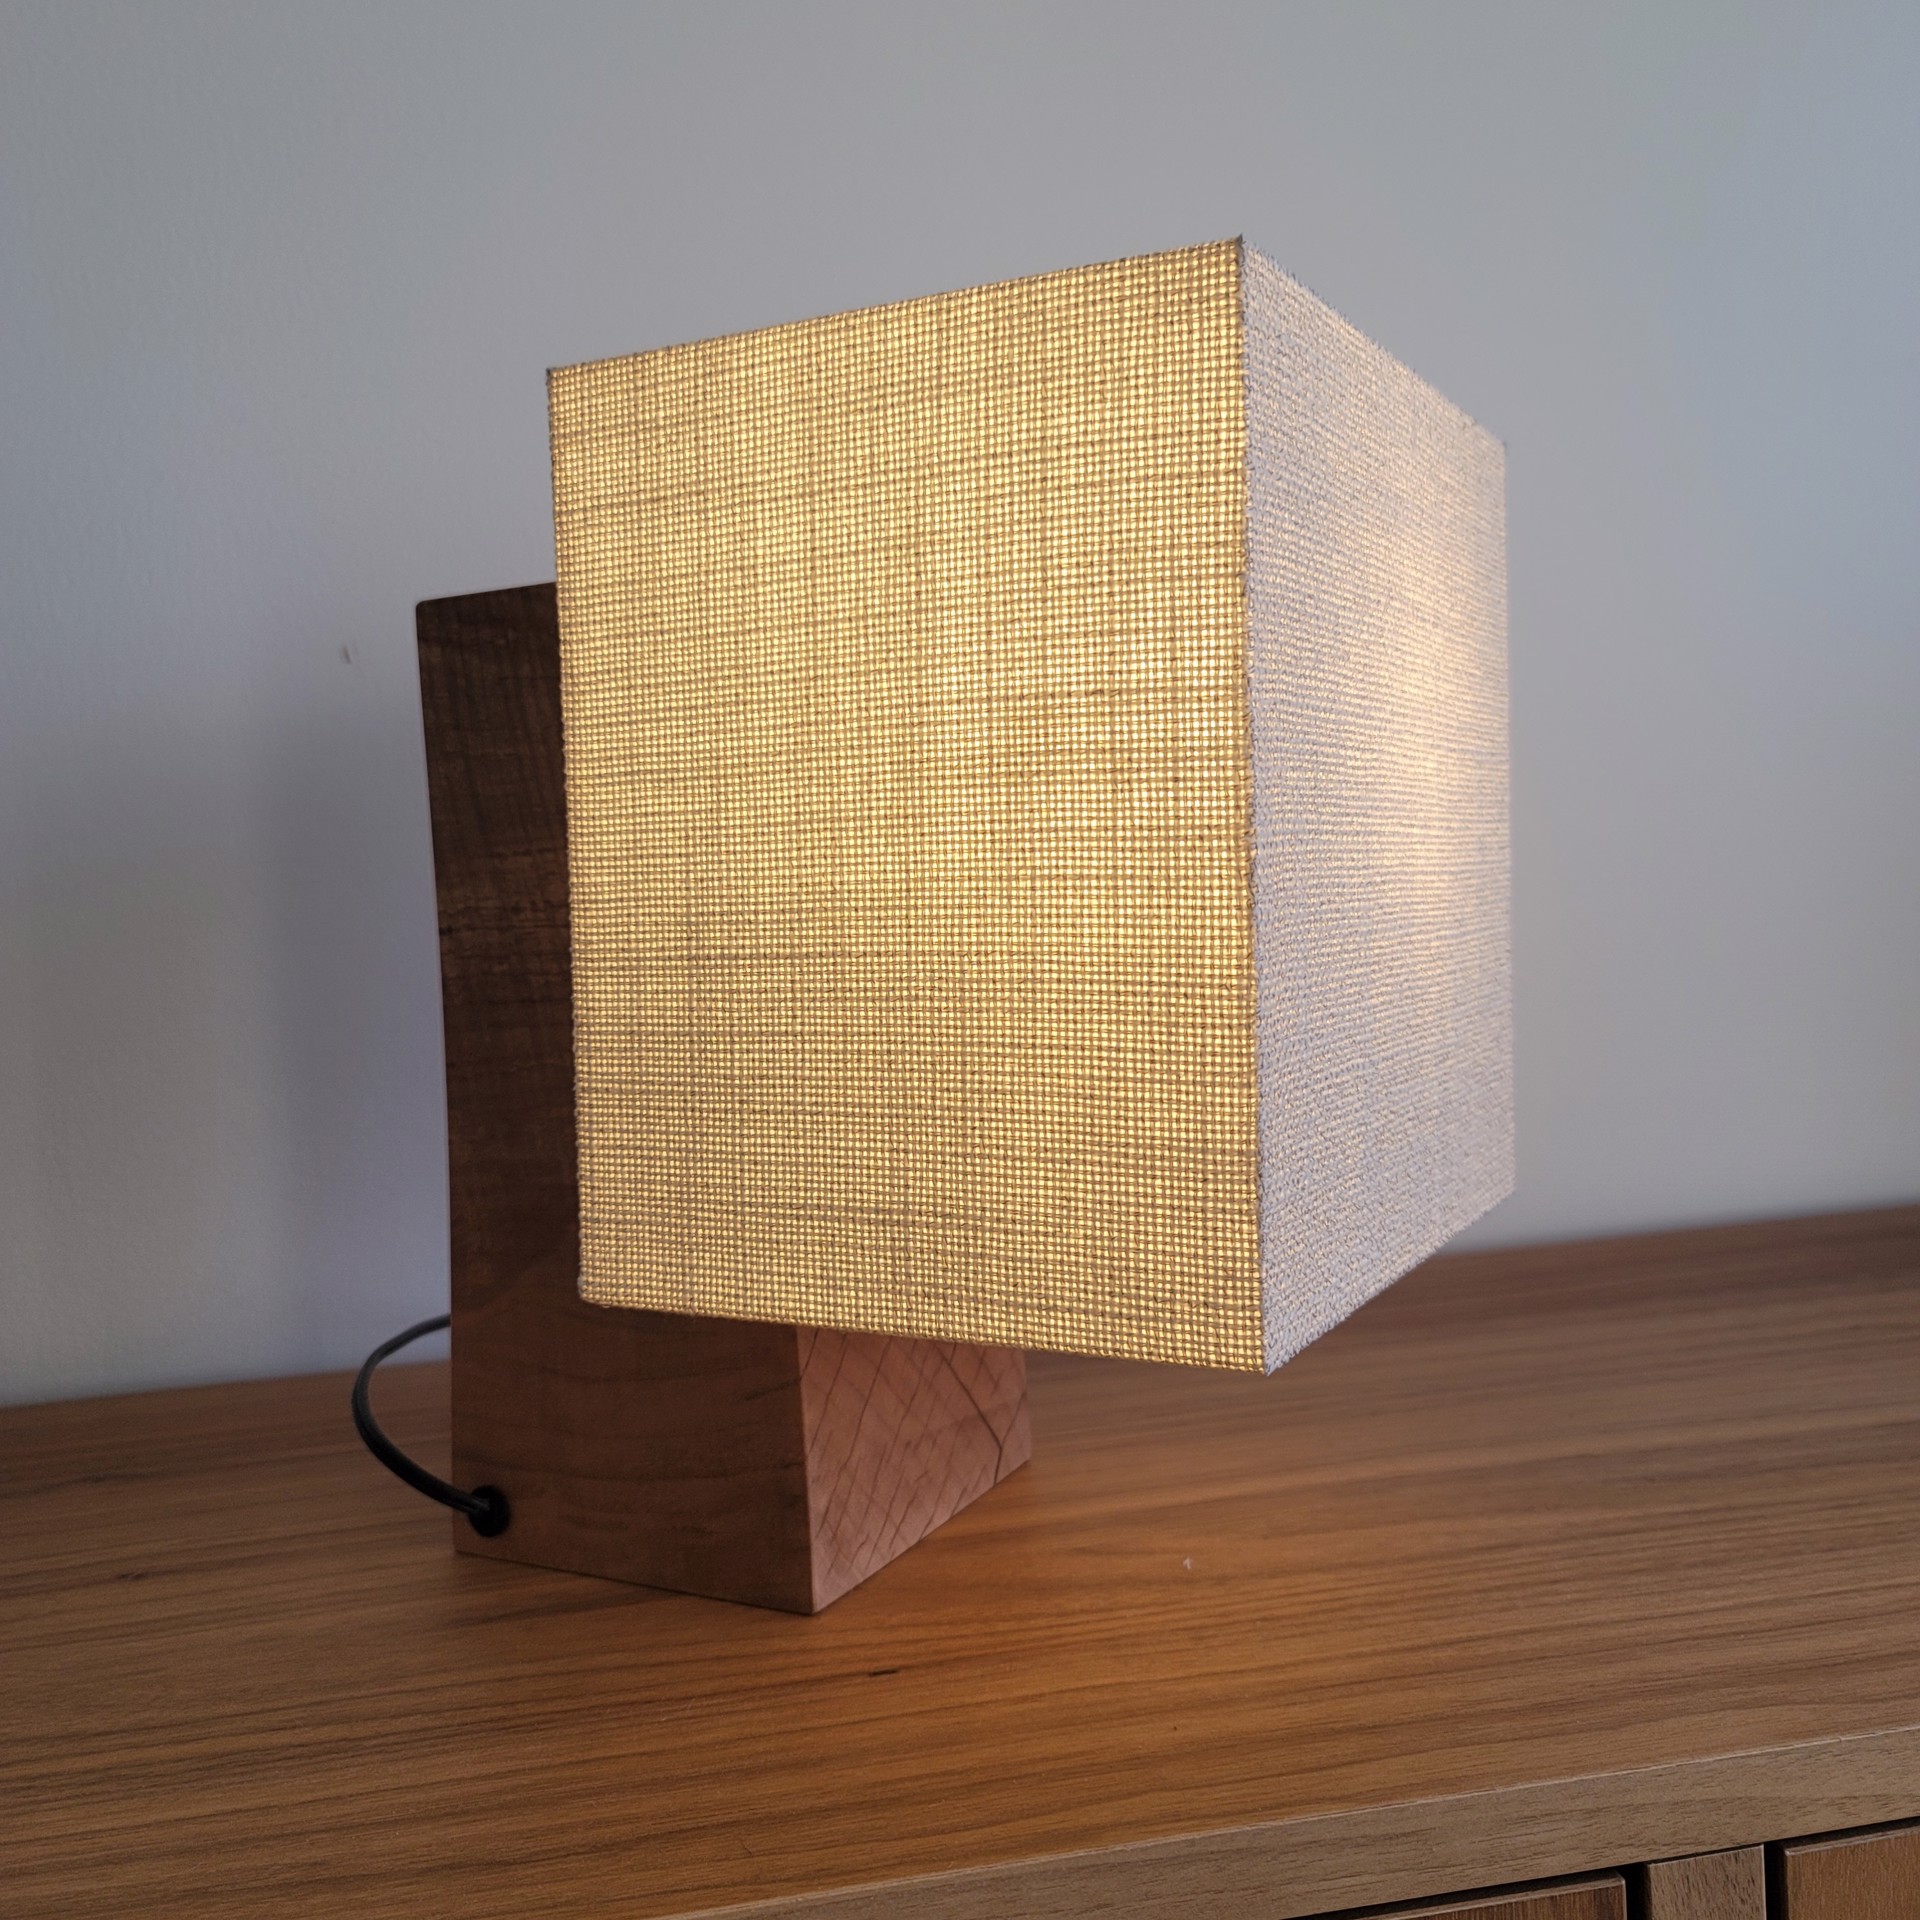 Maple Block Lamp by James Violette